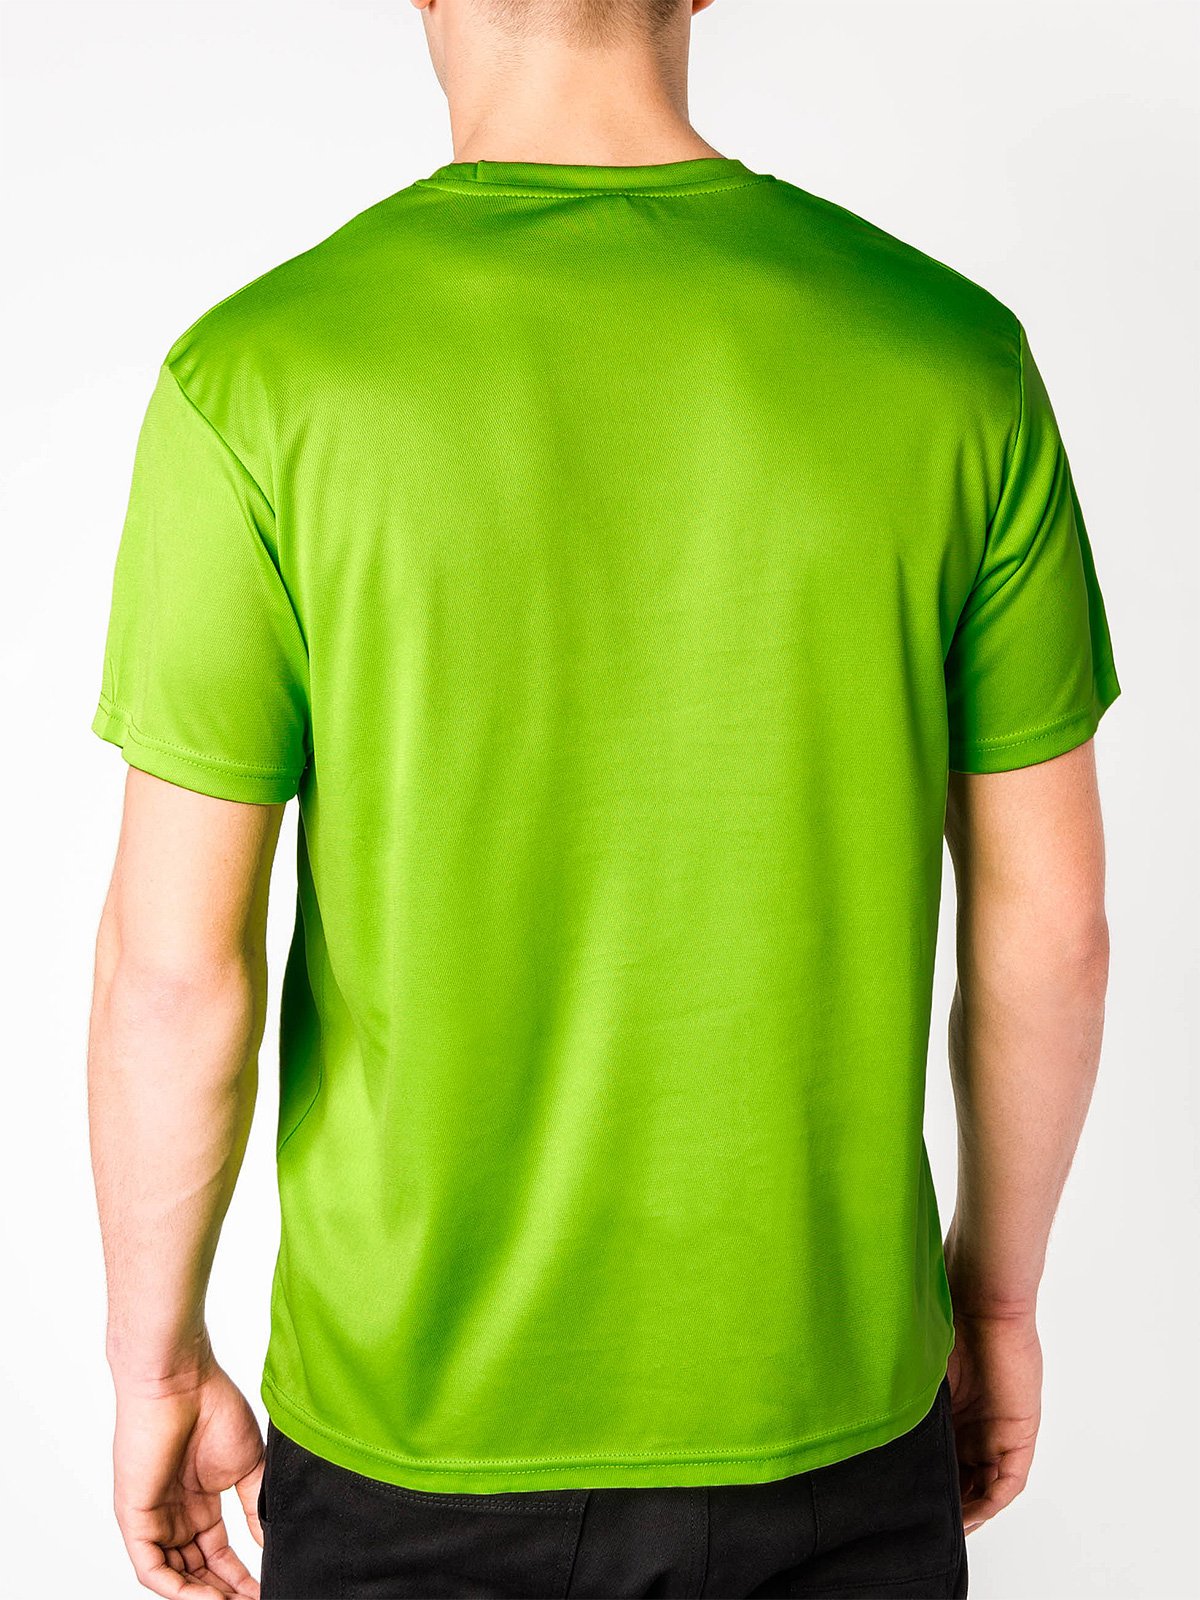 Men's plain t-shirt S883 - lime green | MODONE wholesale - Clothing For Men